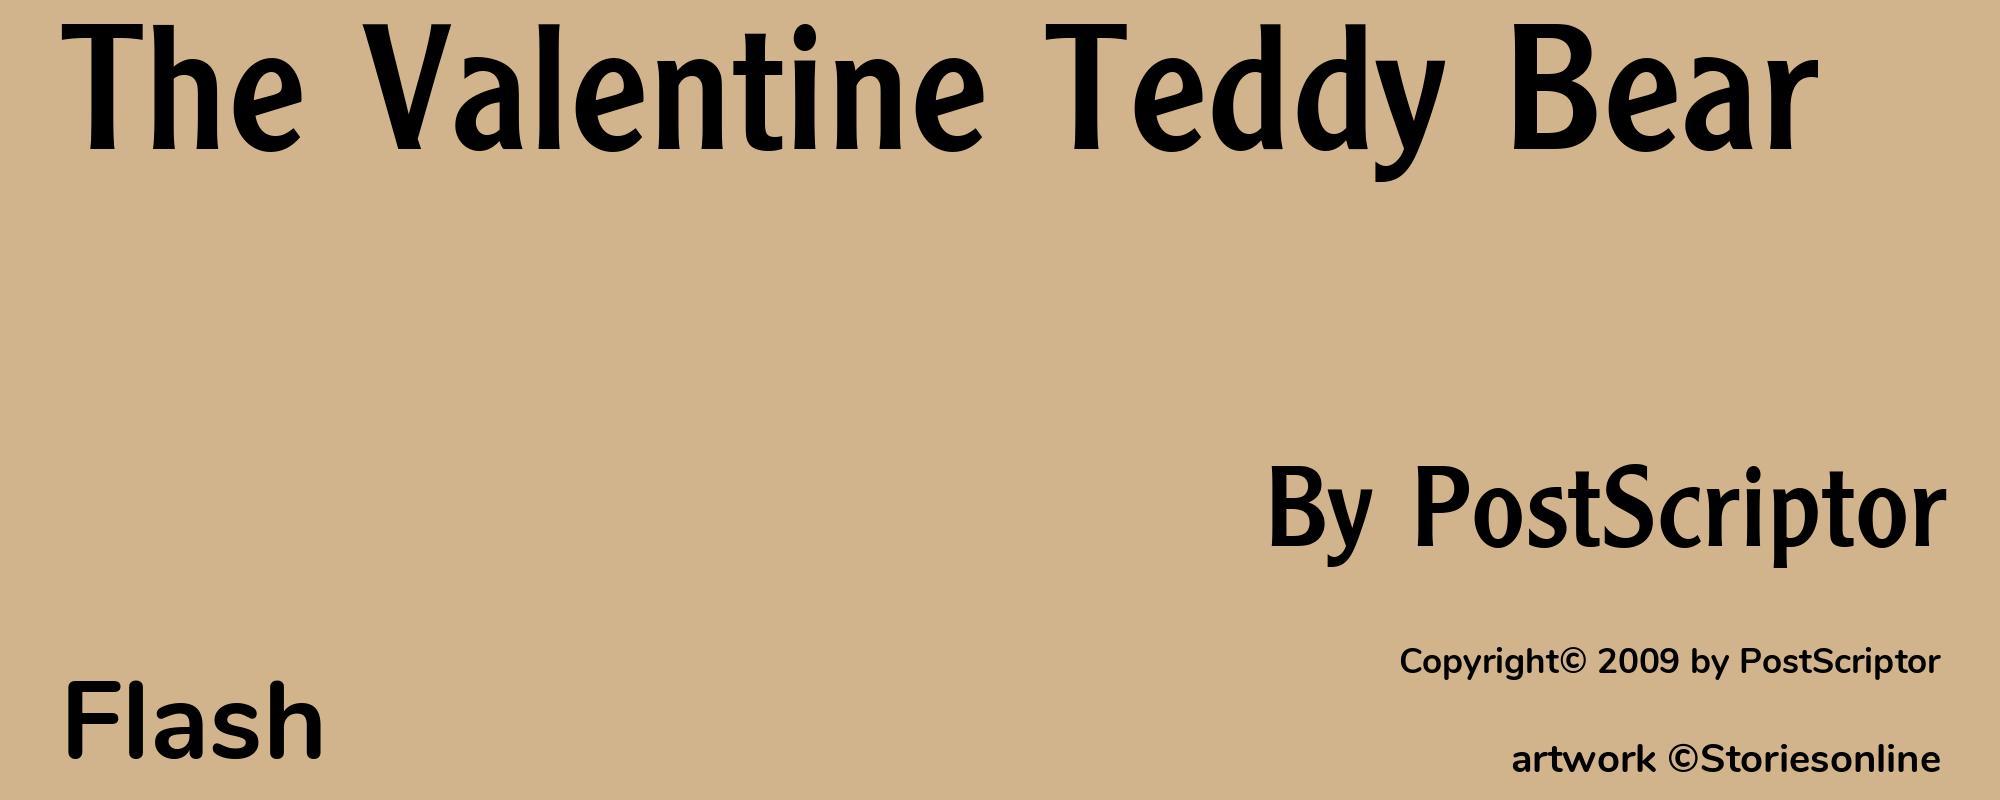 The Valentine Teddy Bear - Cover